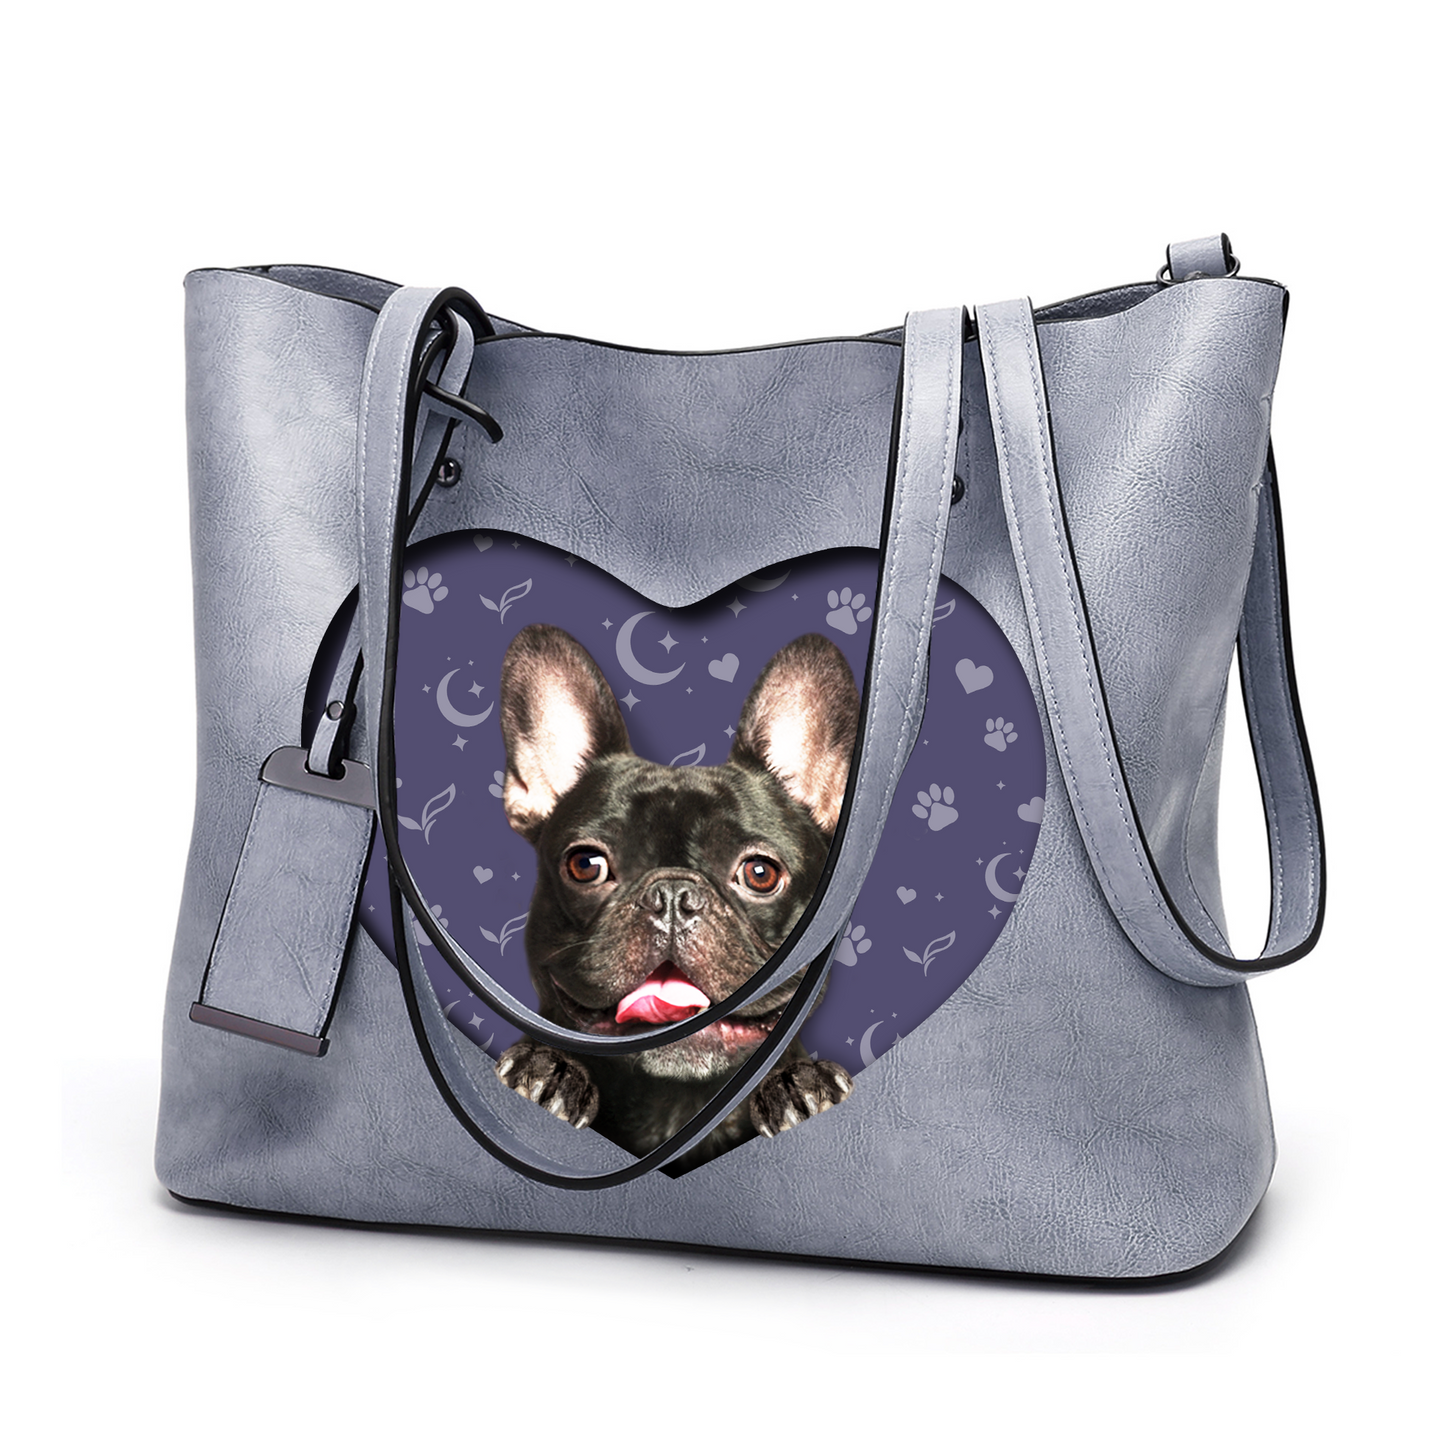 I Know I'm Cute - French Bulldog Glamour Handbag V2 - 9